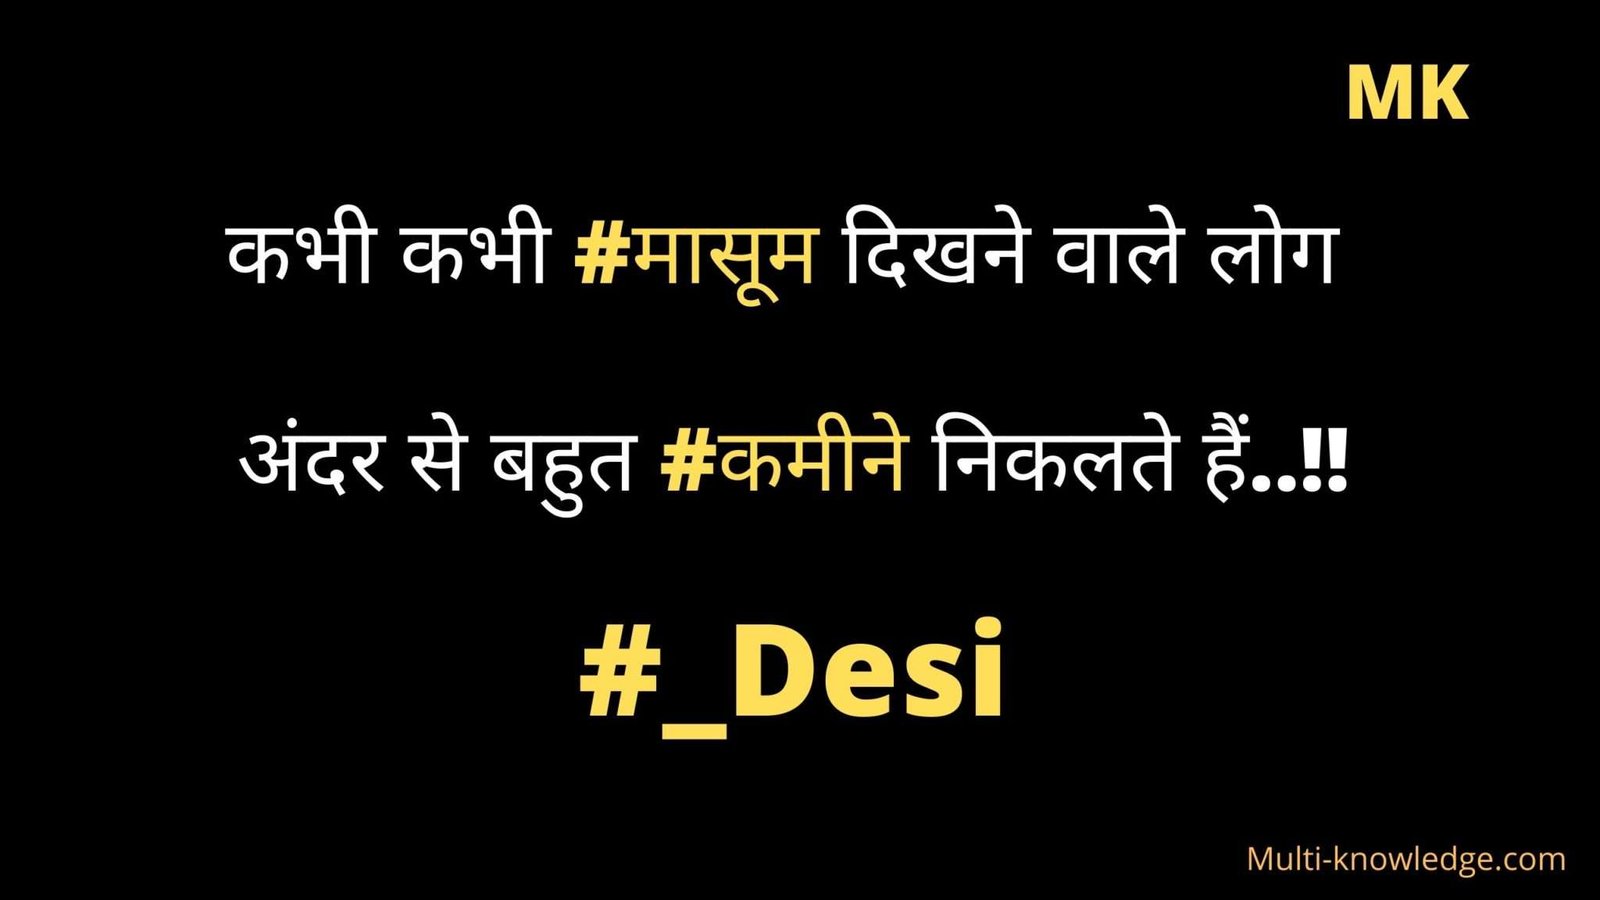 Desi status for whatsapp in Hindi by multi-knowledge.com